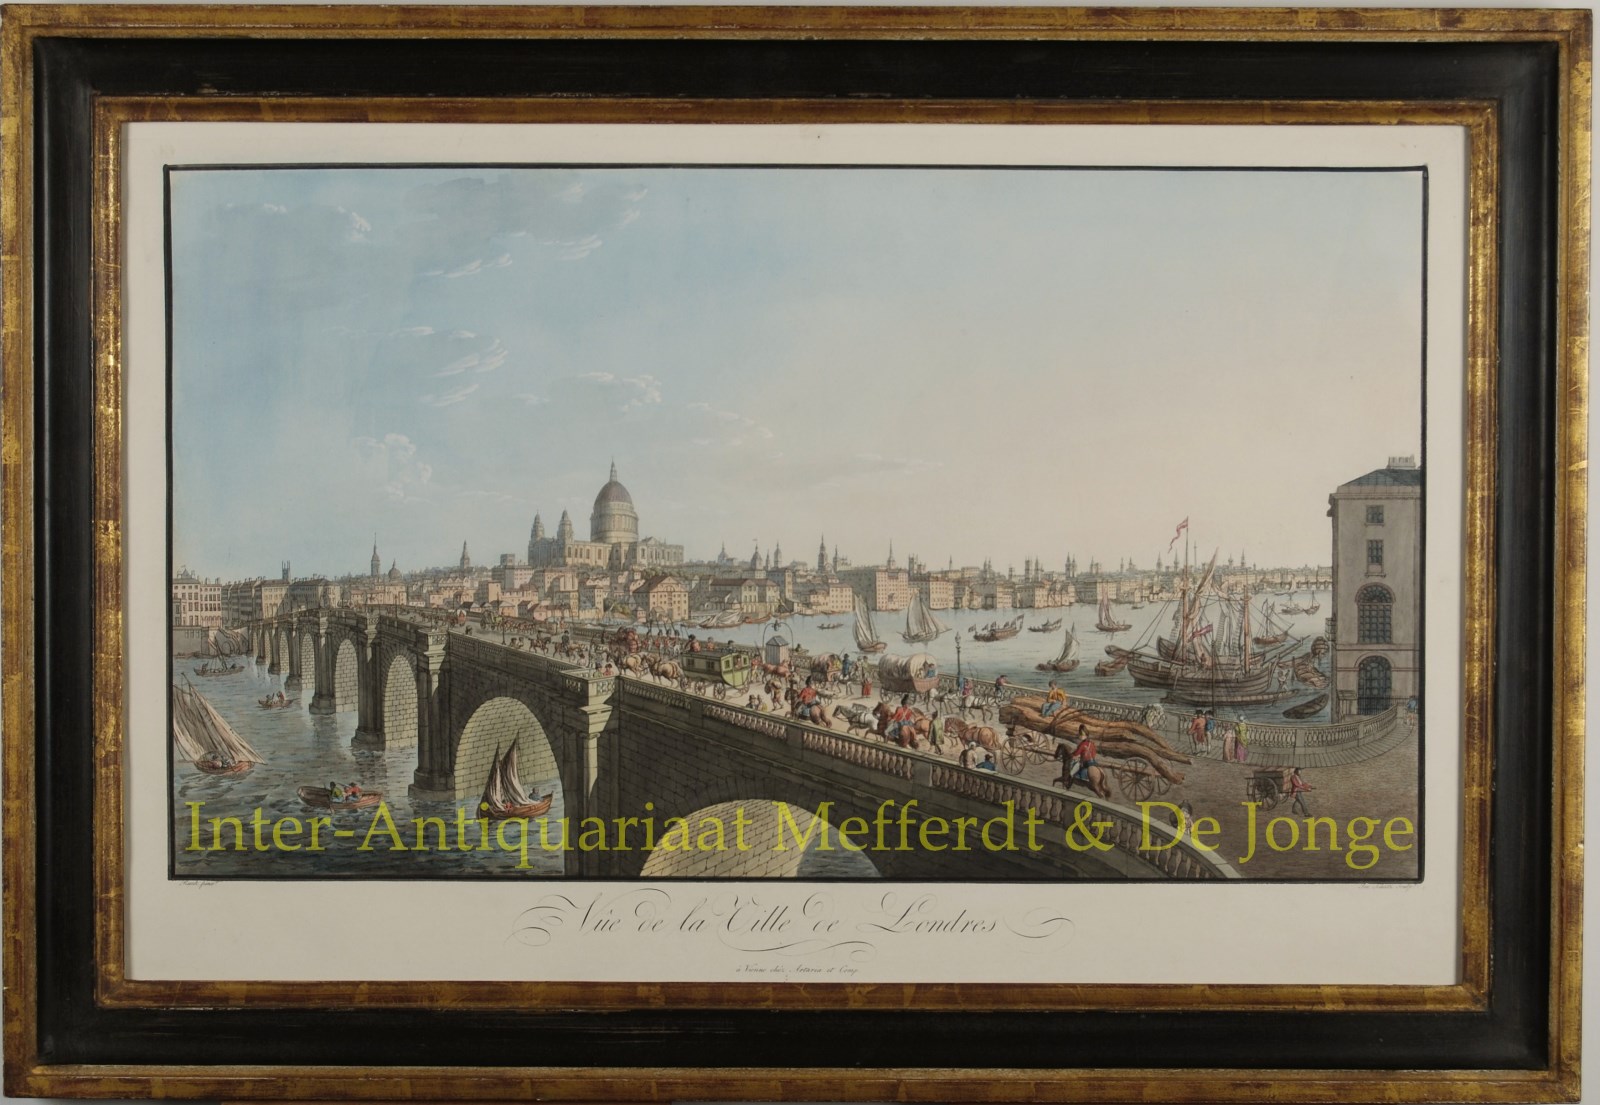 Runk-- Friedrich Ferdinand - London Blackfriars Bridge - Joseph Schtz after Friedrich Ferdinand Runk, c. 1810-1820